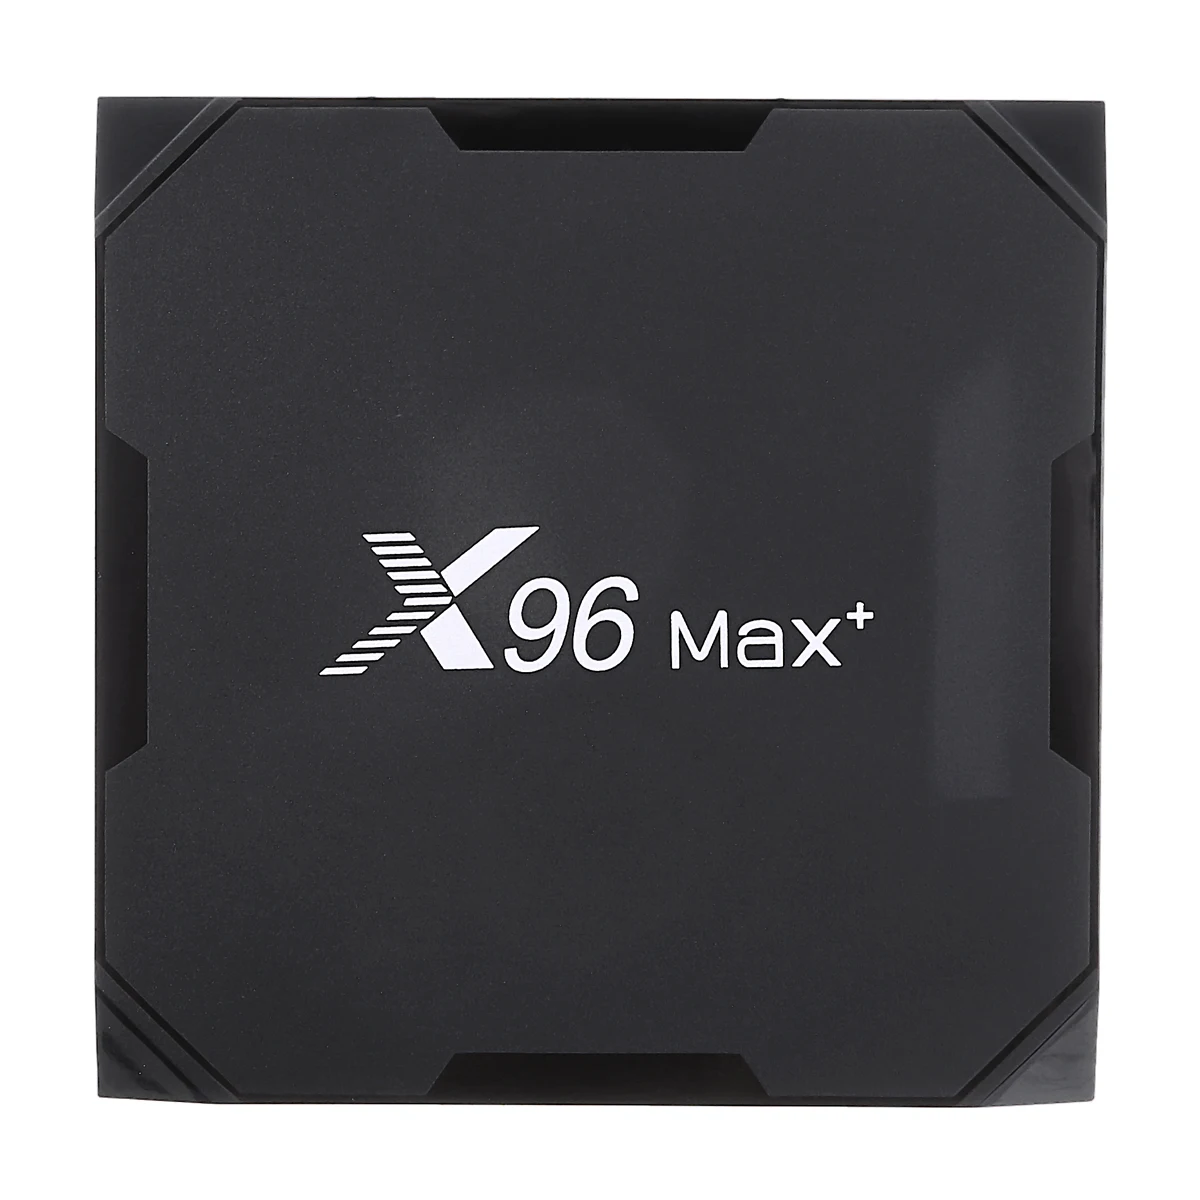 Naujas Atvykimo 1 Set Android 9.0 TV Box X96 Max Plius Amlogic S905x3 4K Smart Media Player 2GB+16GB X96Max Plus Set top Box